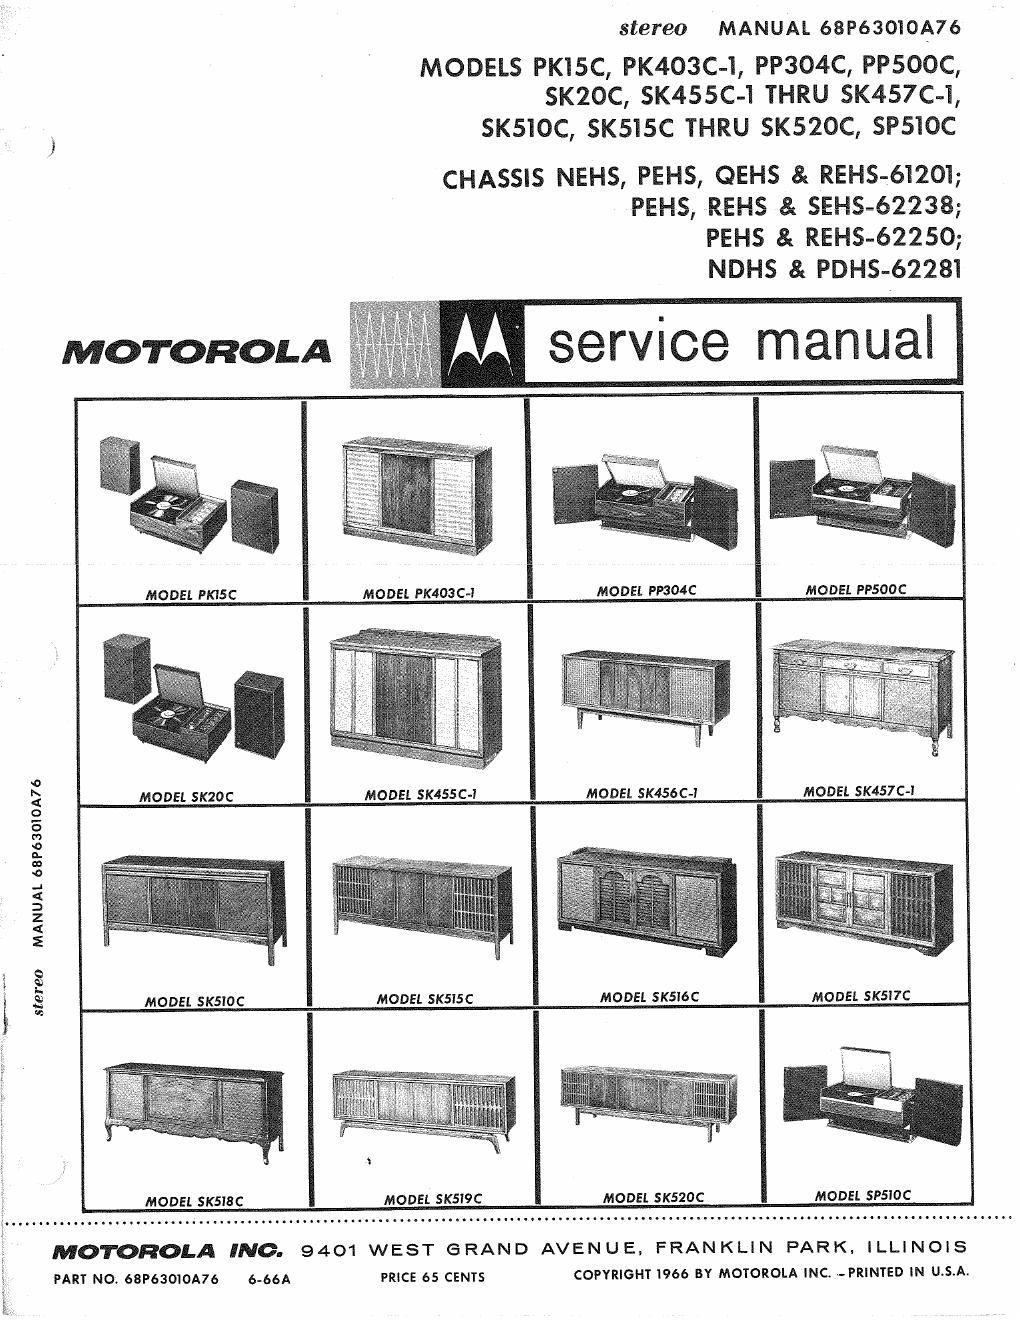 motorola sk 517 c service manual